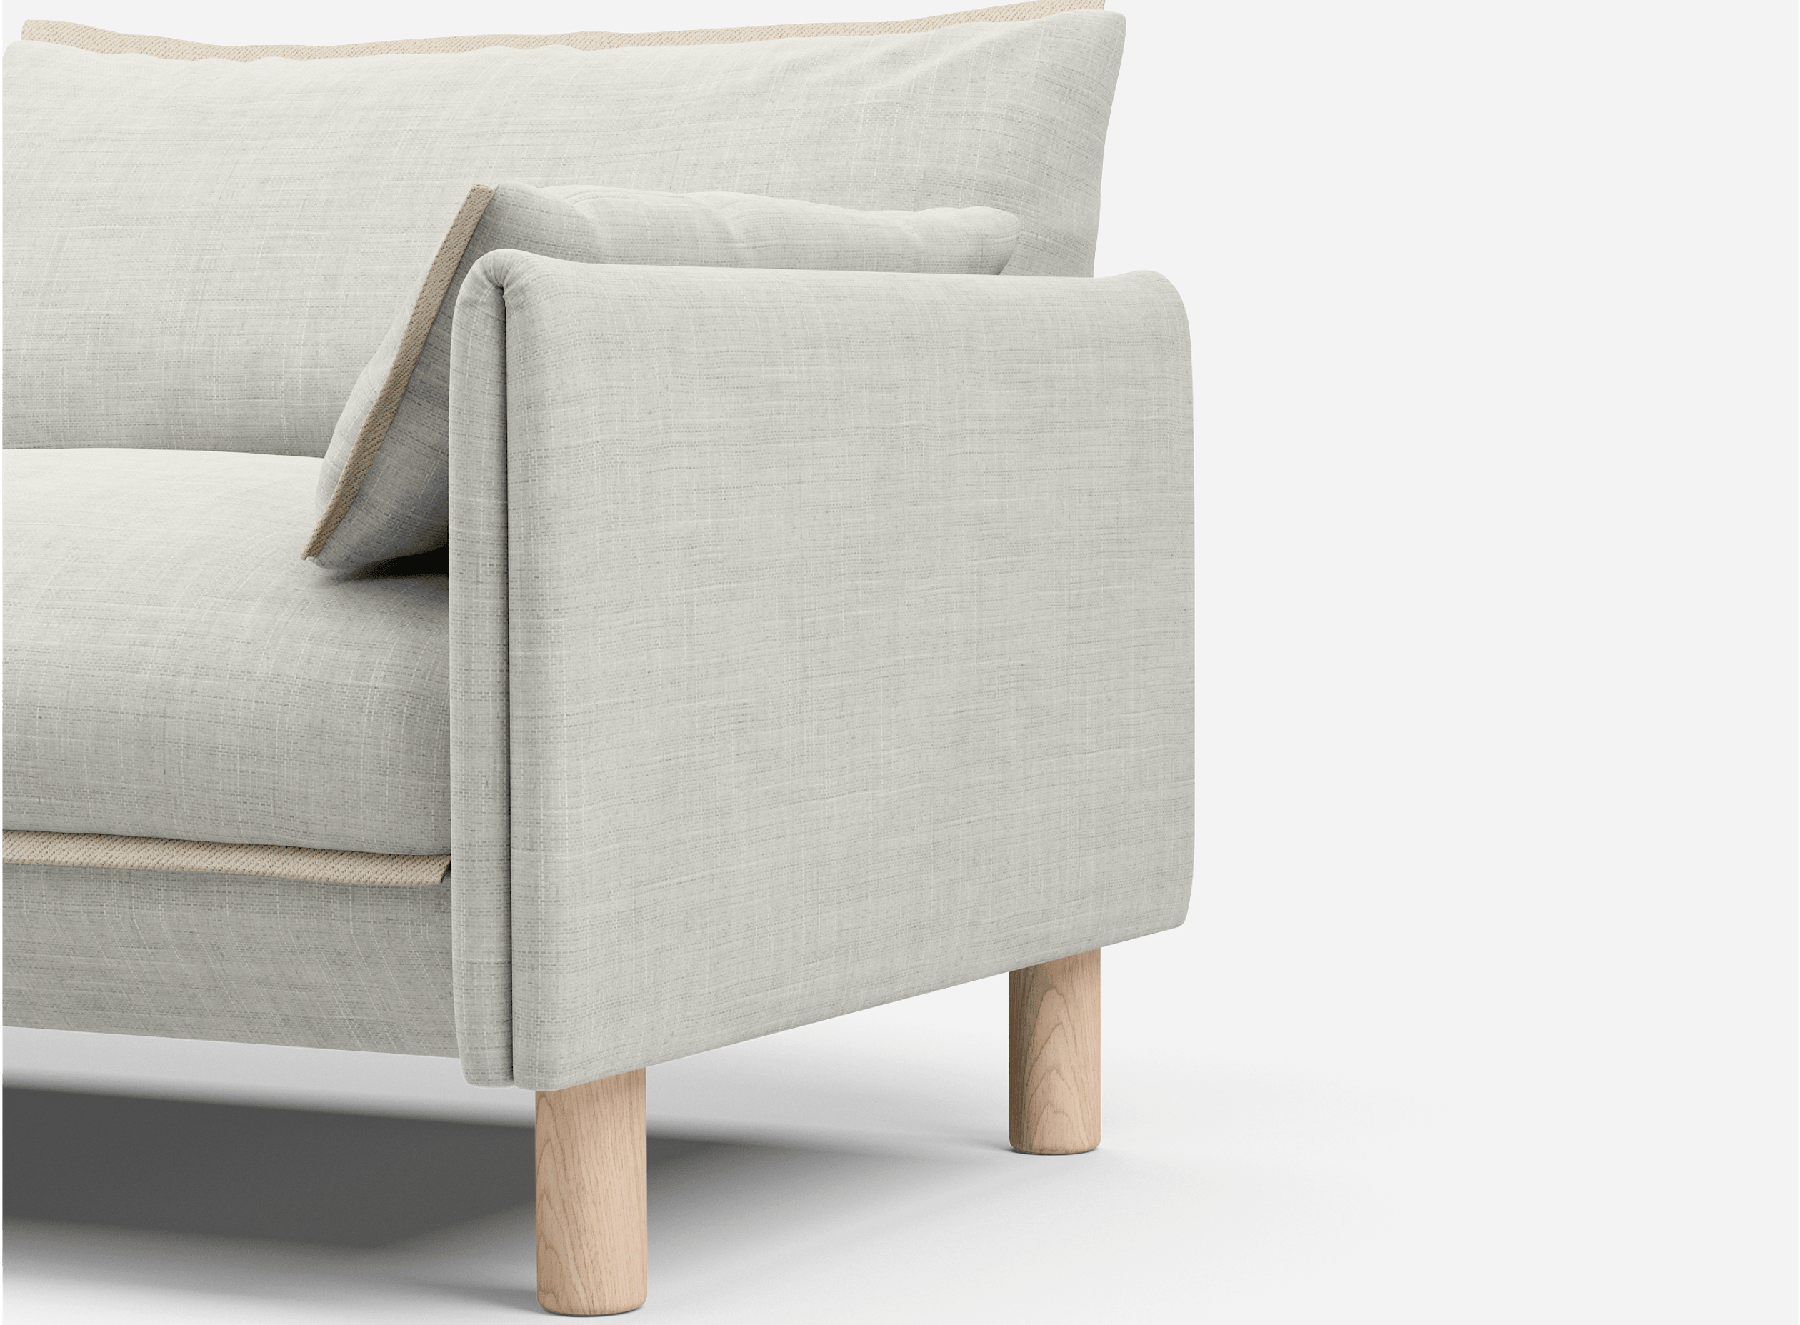 3 seater cozmo sofa weave ecru with weave ecru jacket front 1/3 angled view @ Ecru Weave Jacket | Natural Trim